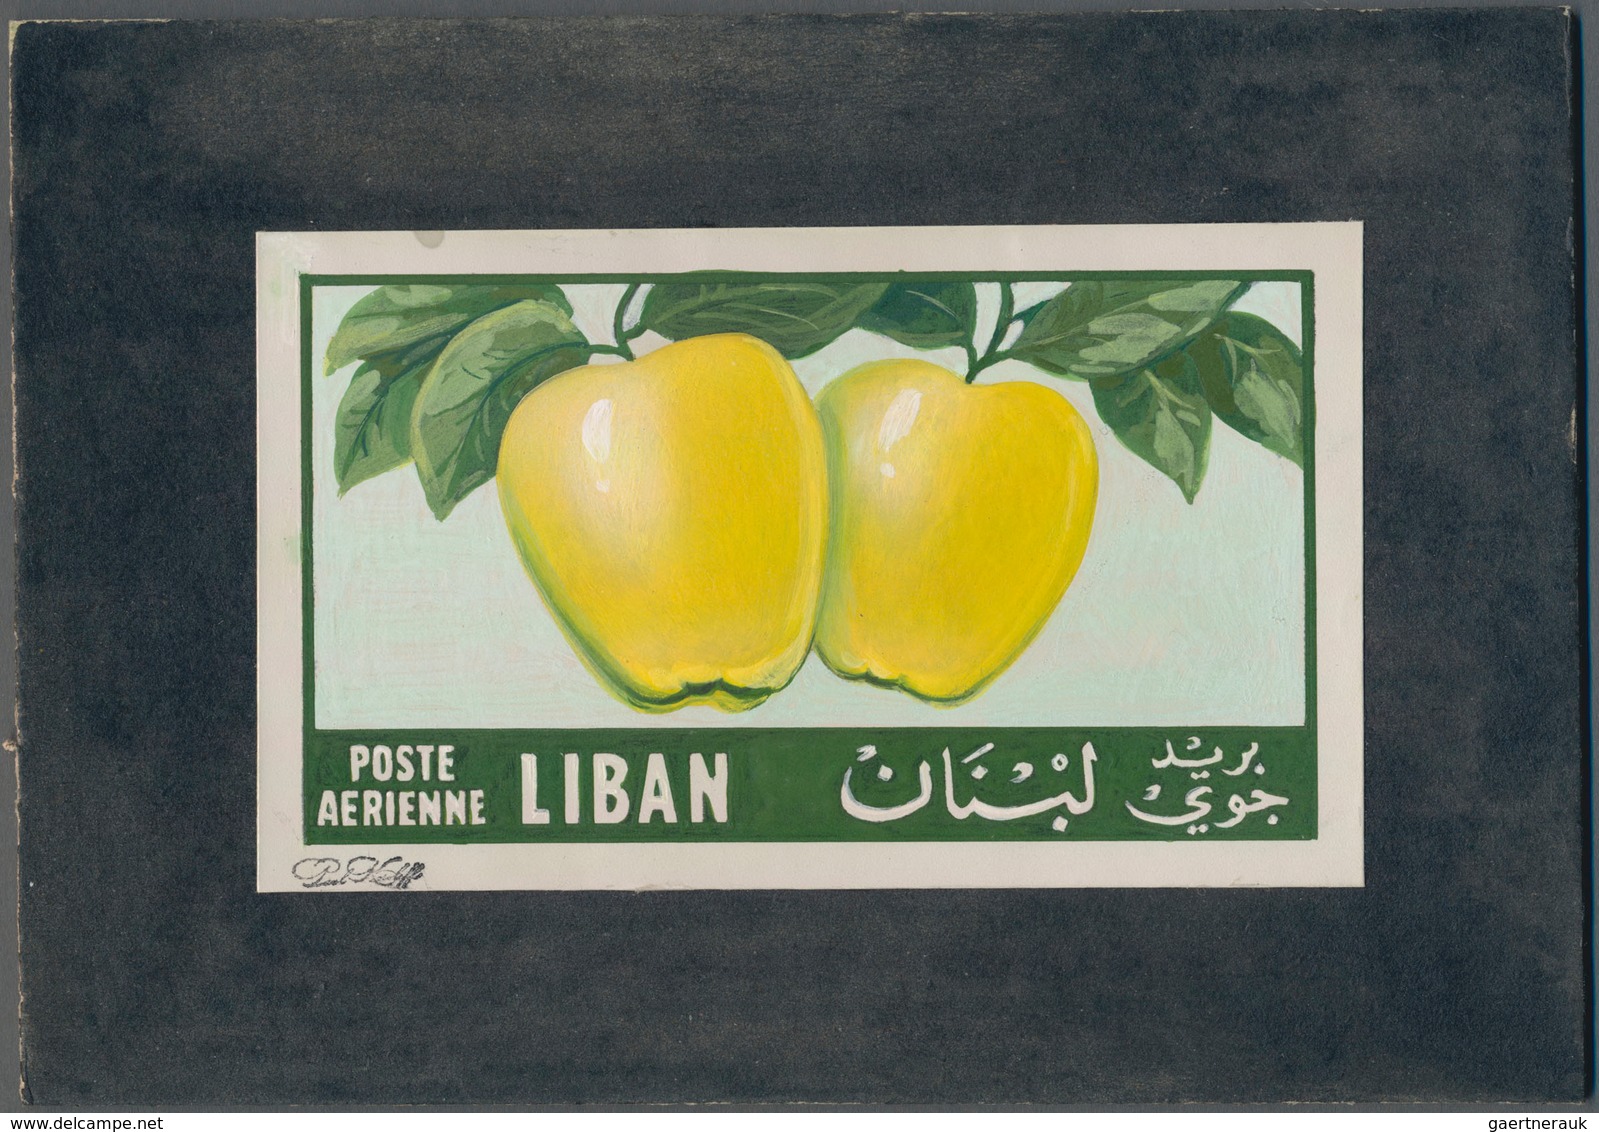 Thematik: Flora-Obst + Früchte / Flora-fruits: 1955, Libanon, Issue Fruit, Artist Drawing(140x85) Qu - Obst & Früchte